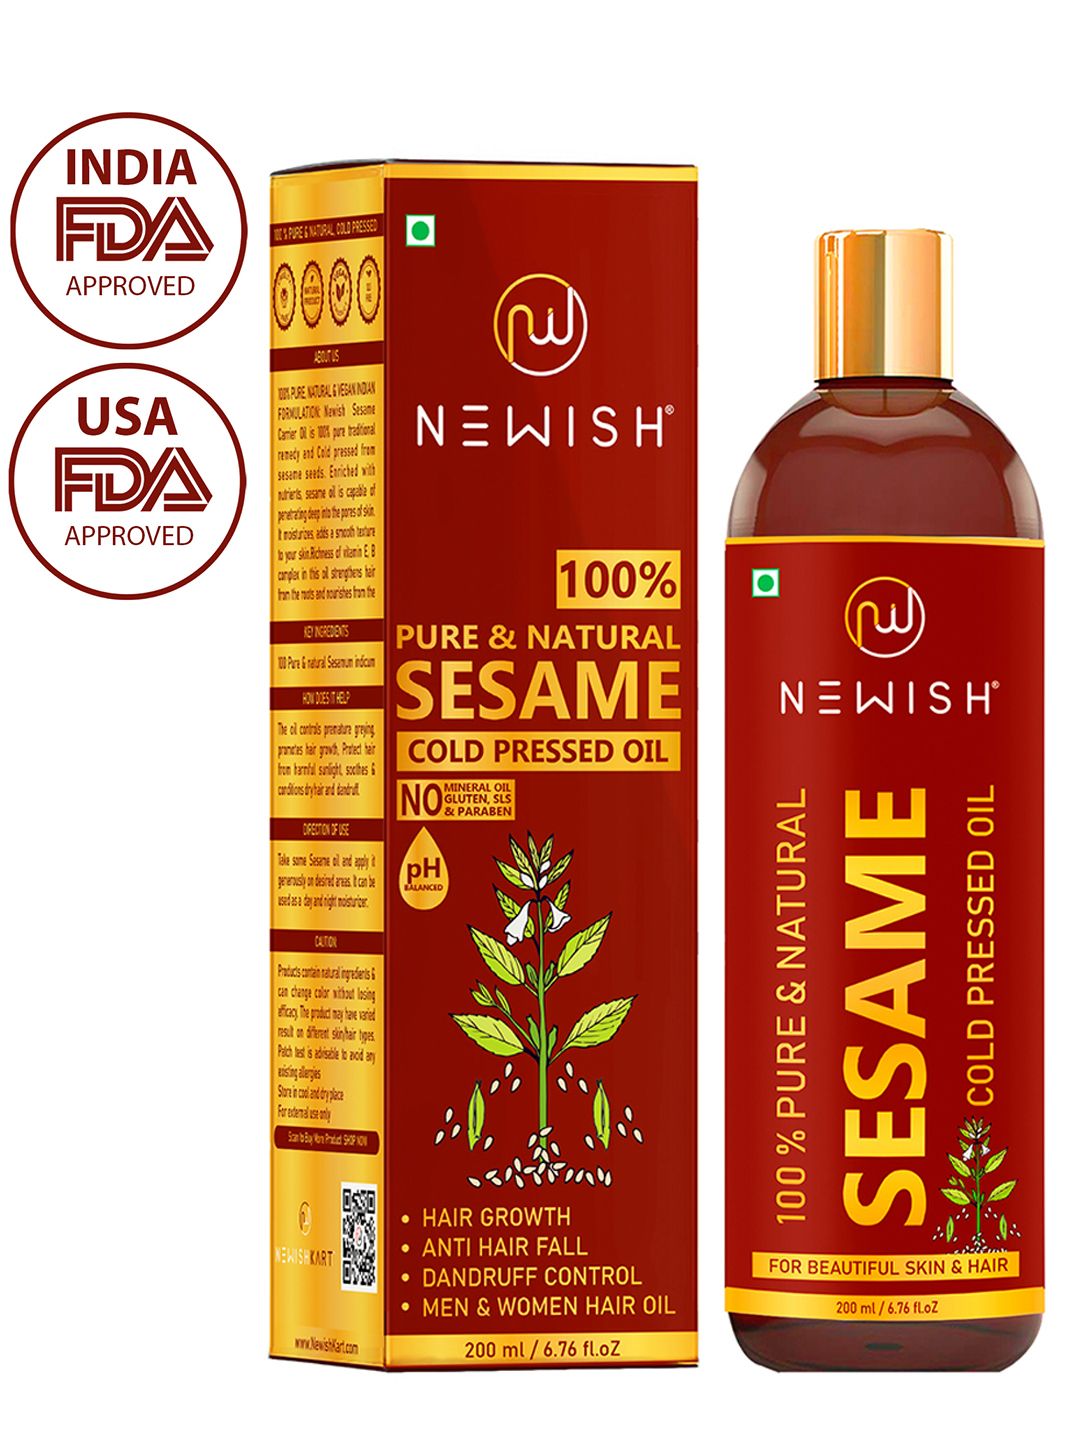 NEWISH Pure & Natural Sesame Cold Pressed Oil 200 ml Price in India